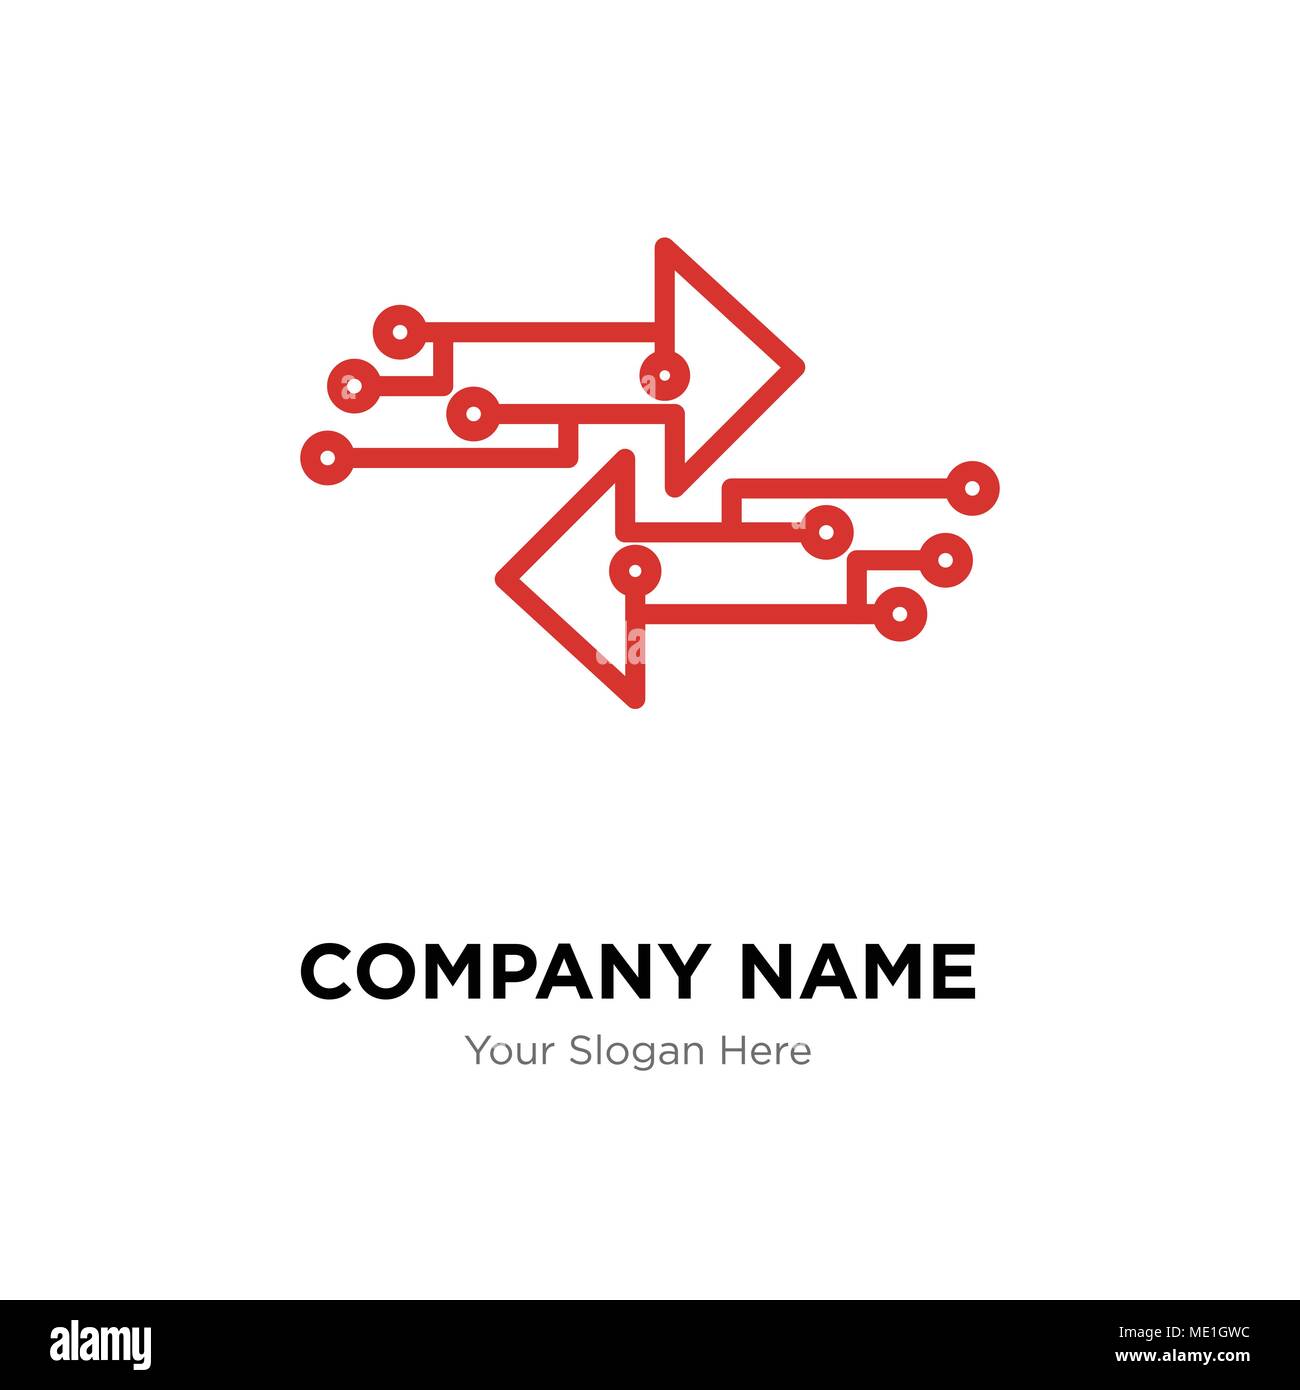 Transfer company logo design template, Business corporate vector icon Stock Vector